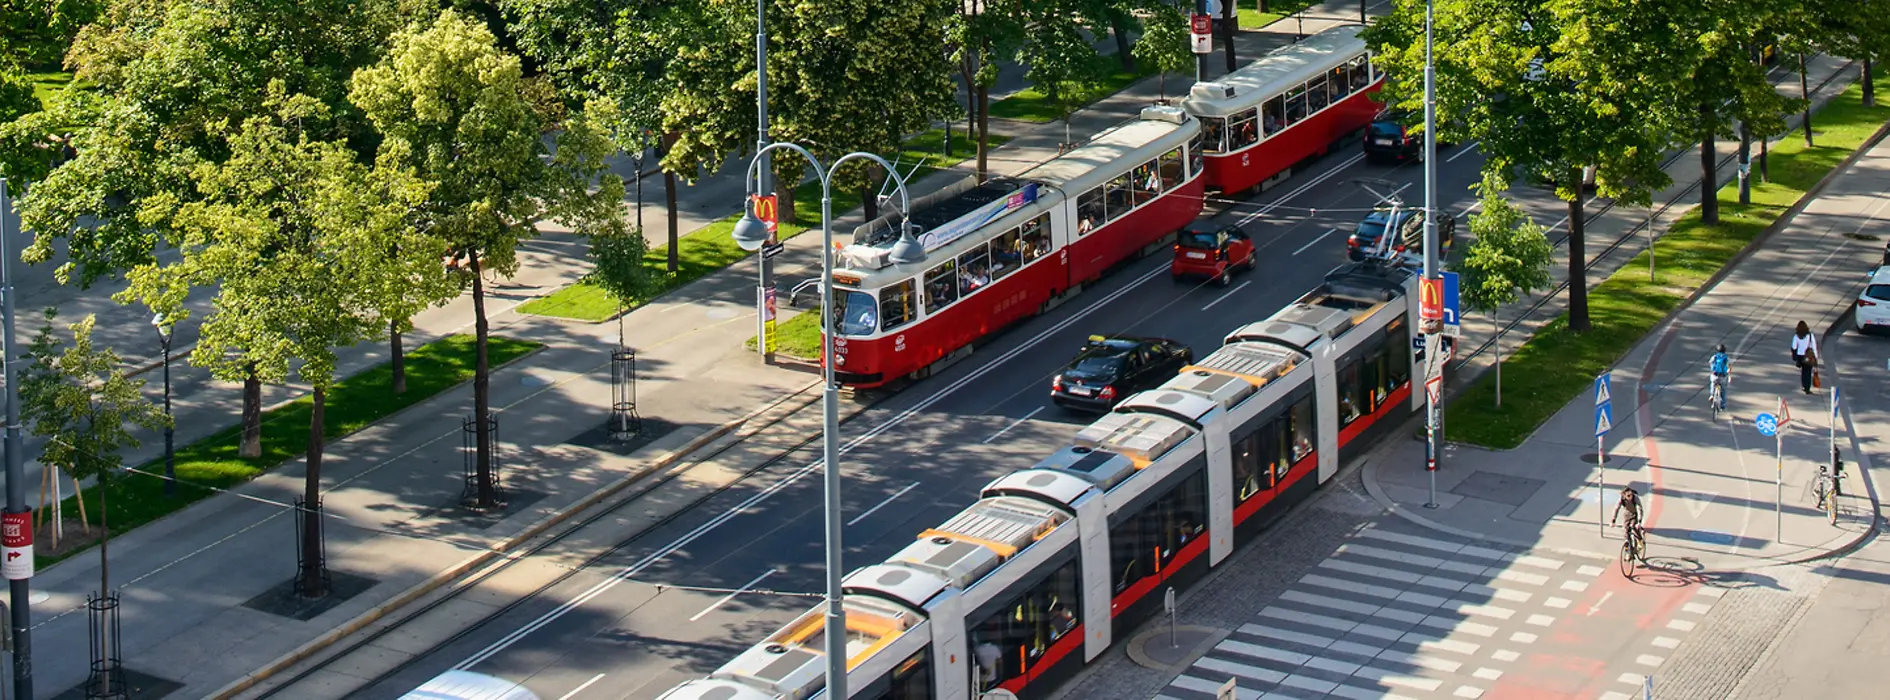 Streetcar sightseeing in Vienna | Travel to Austria